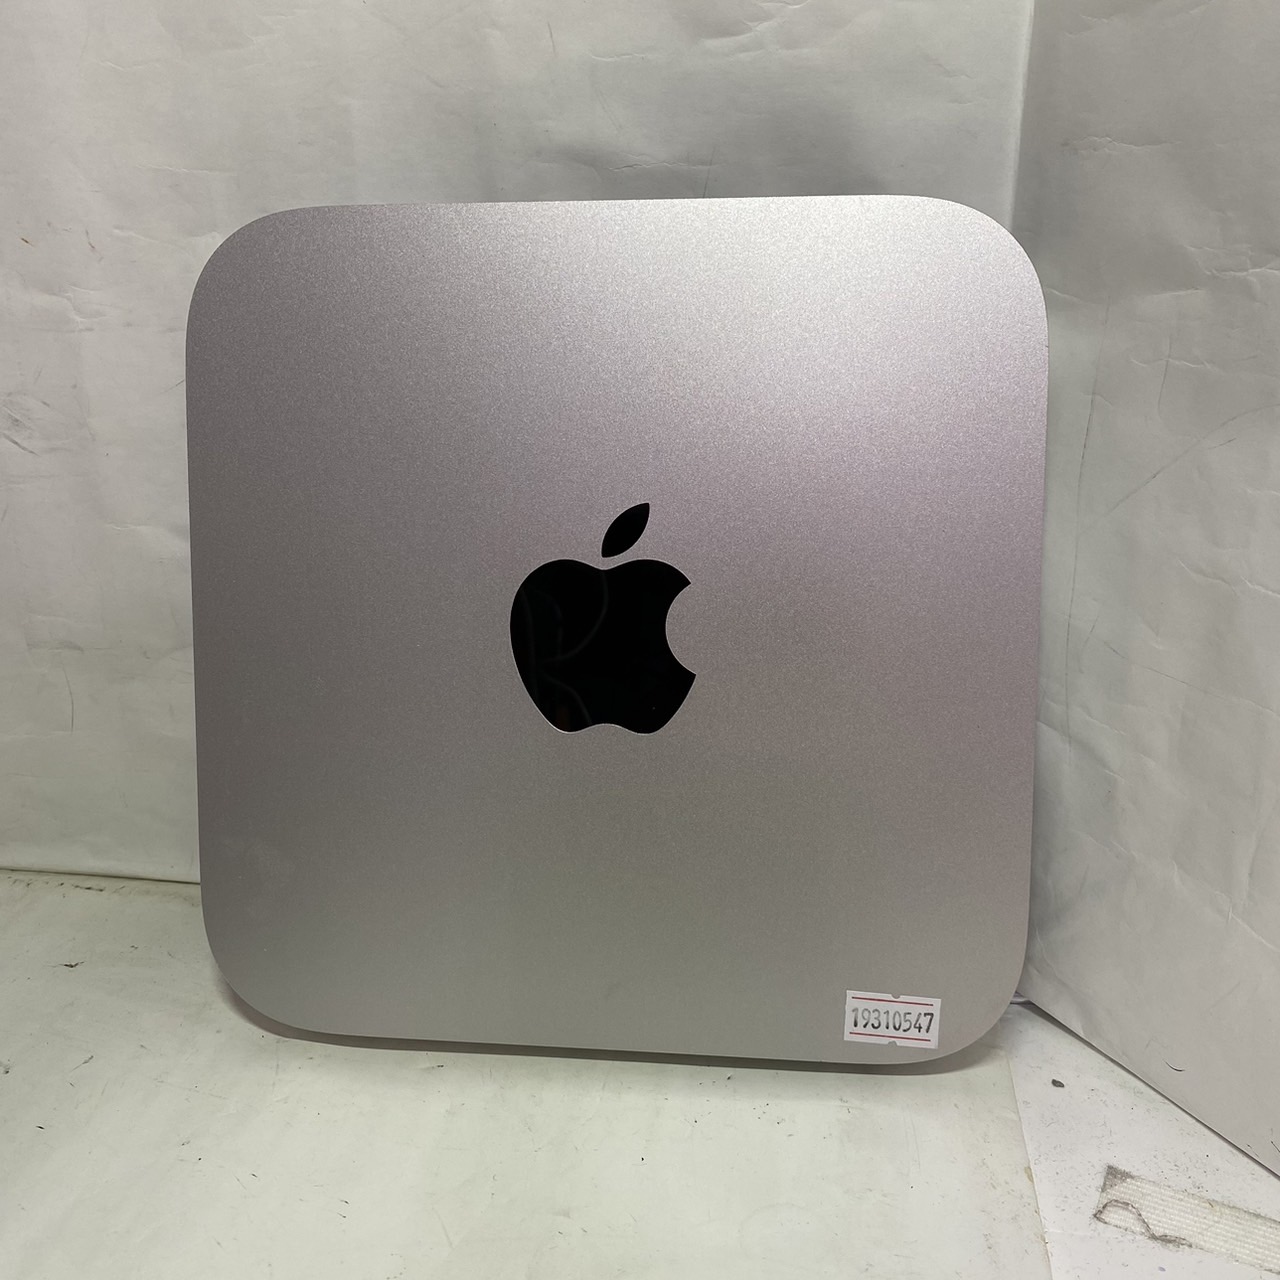 APPLE(アップル) Mac mini (Mid 2014) MC270J/A A1347の激安通販